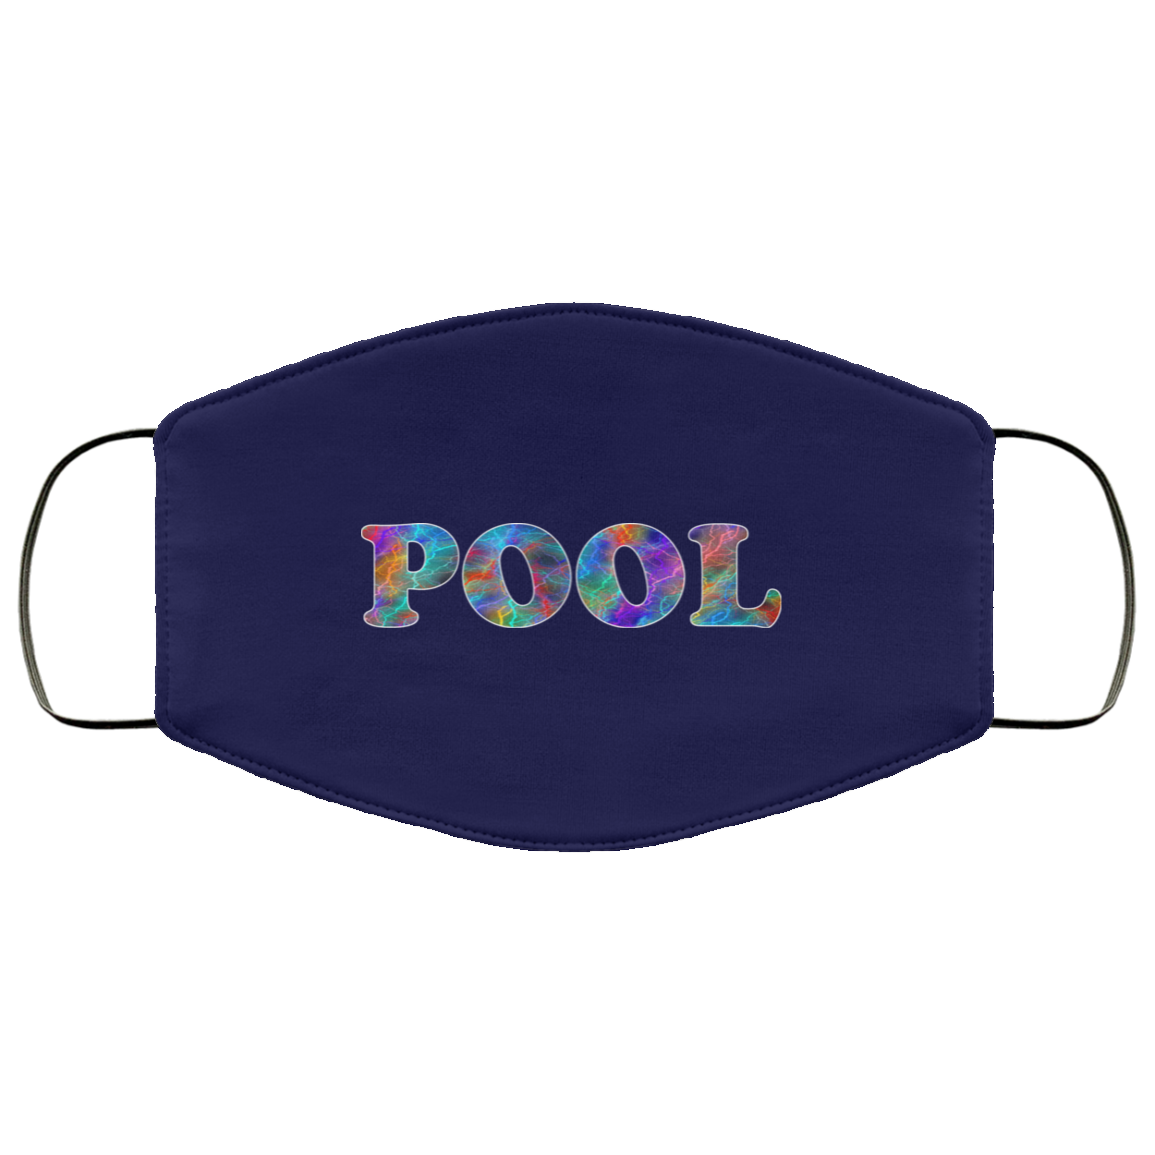 Pool 2 Layer Protective Mask